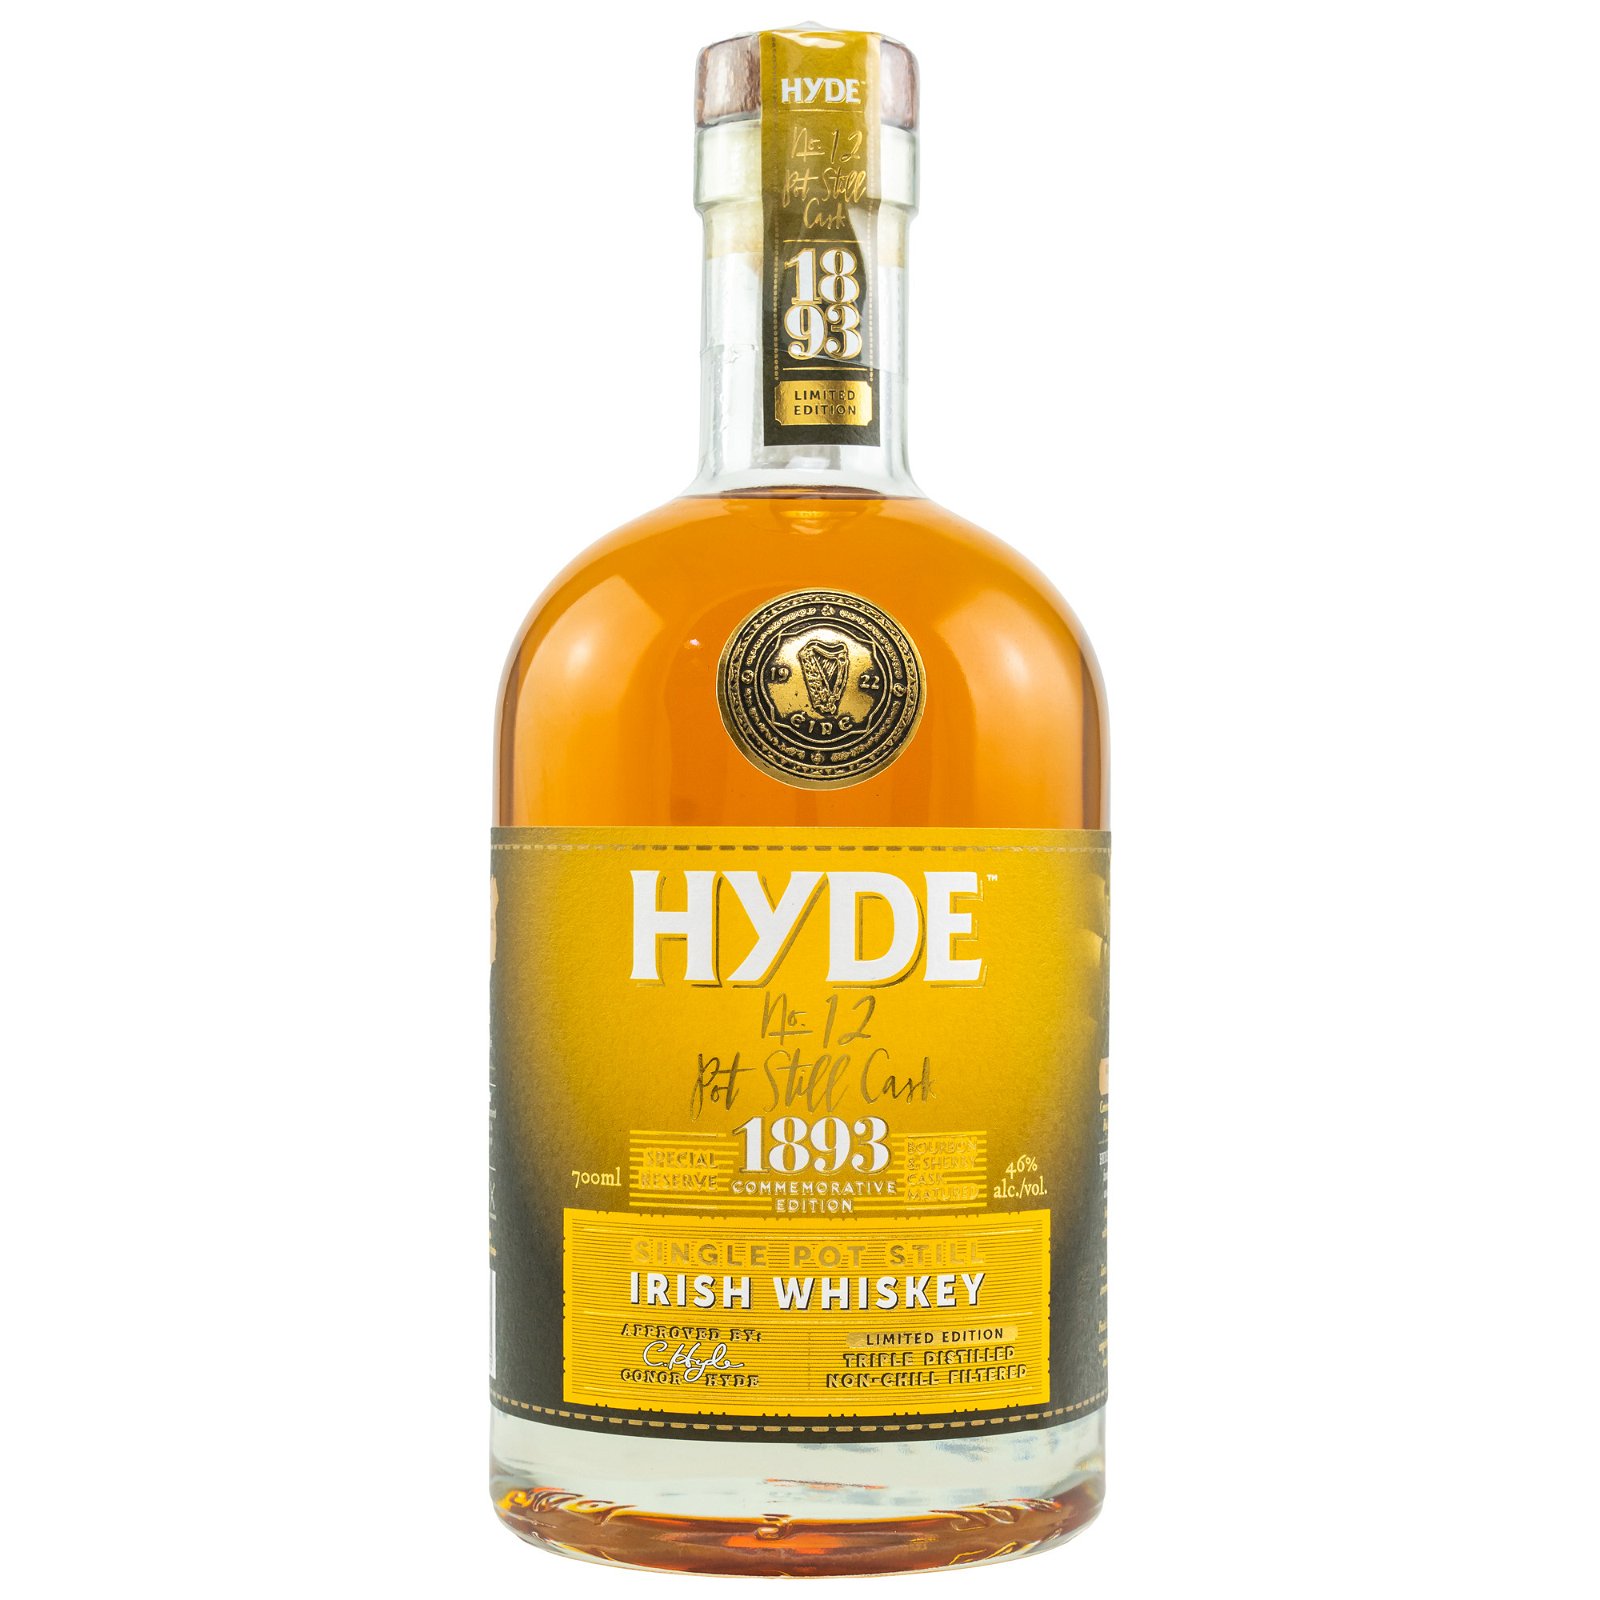 Hyde No. 12 Single Pot Still Irish Whiskey